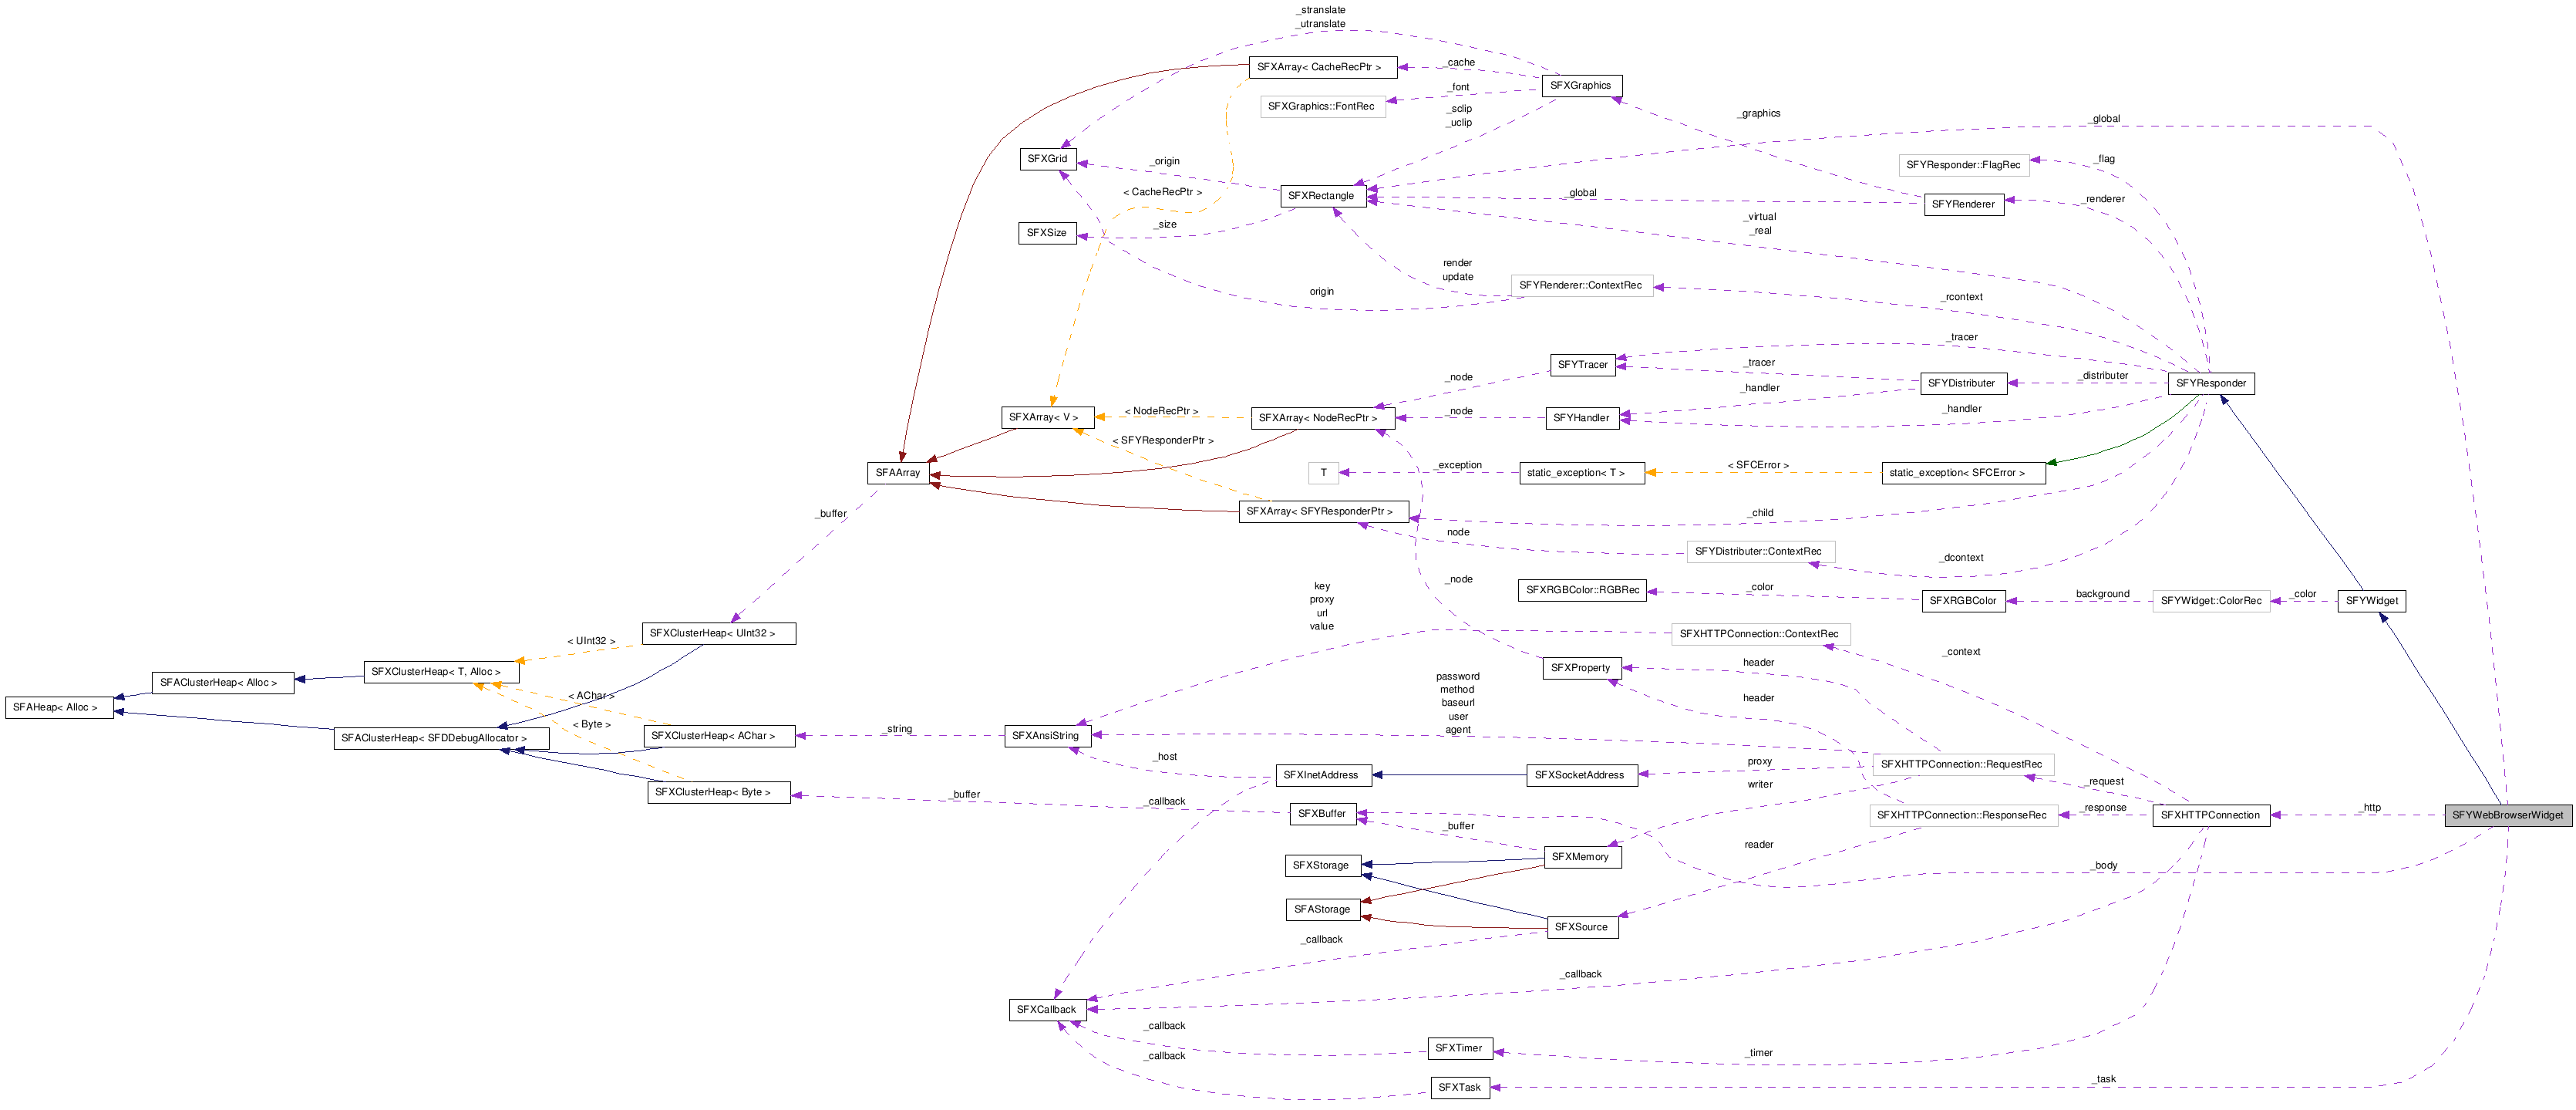  Collaboration diagram of SFYWebBrowserWidgetClass